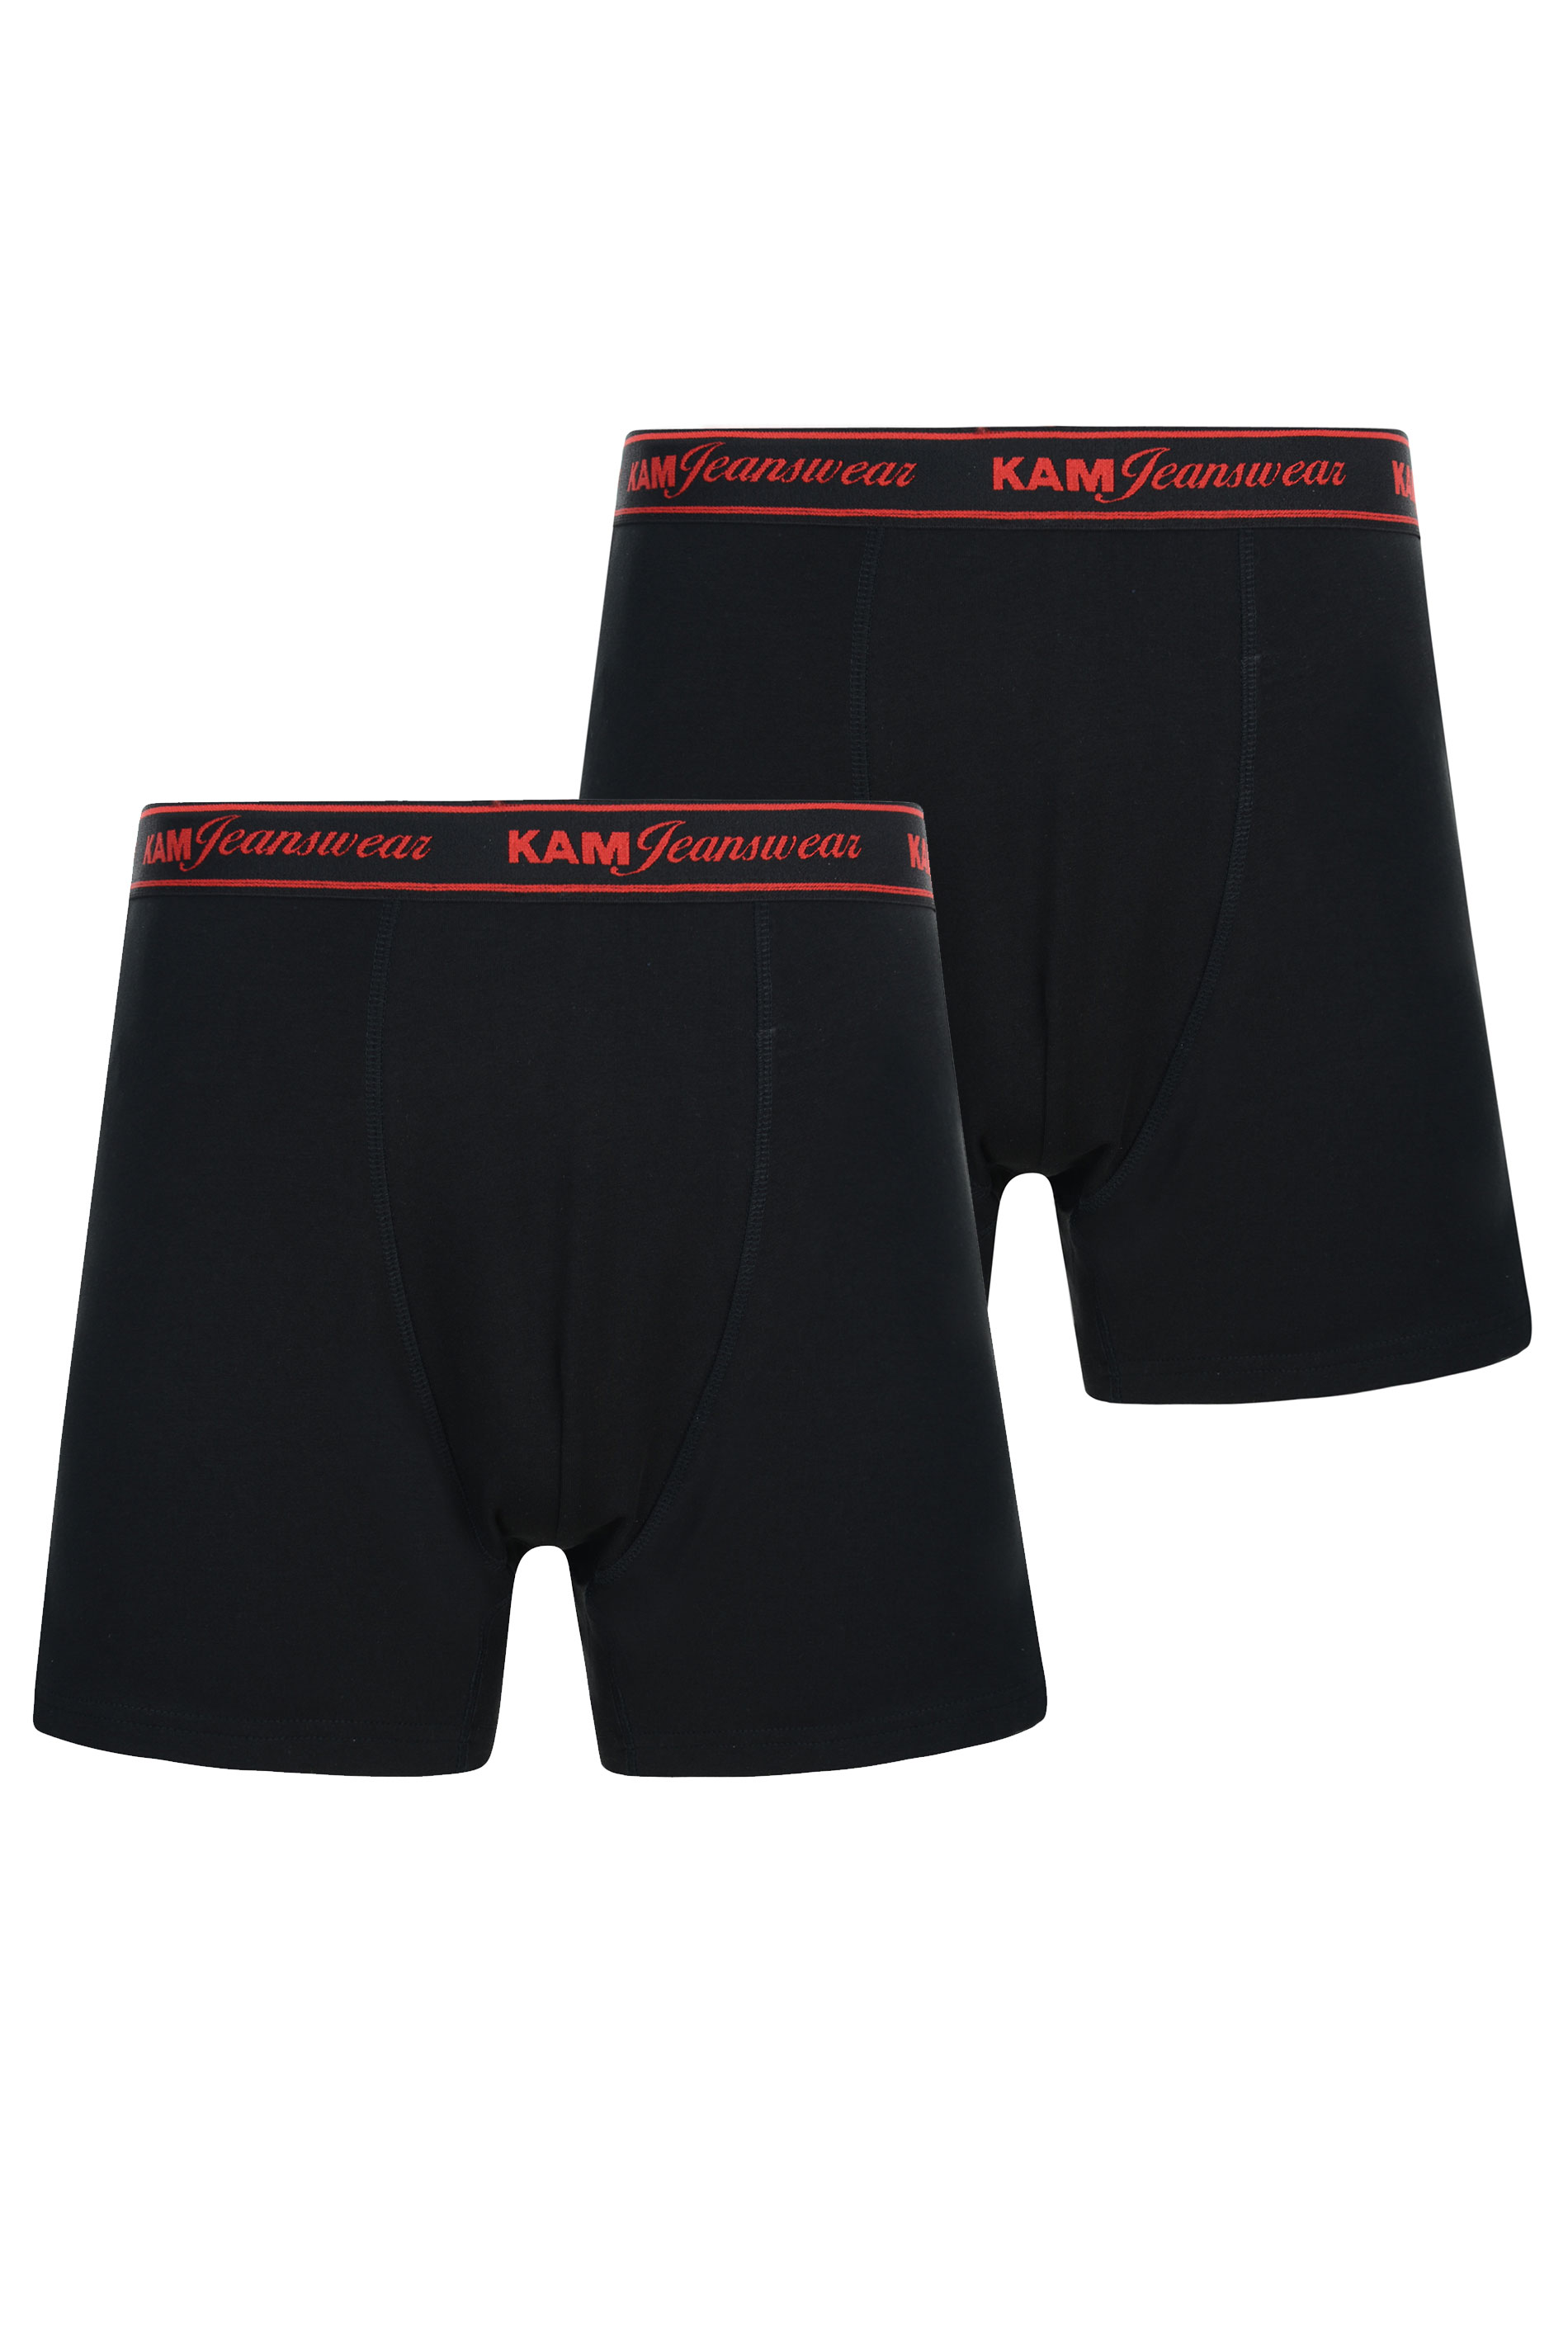 KAM 2 PACK Black Jersey Boxers | BadRhino 3